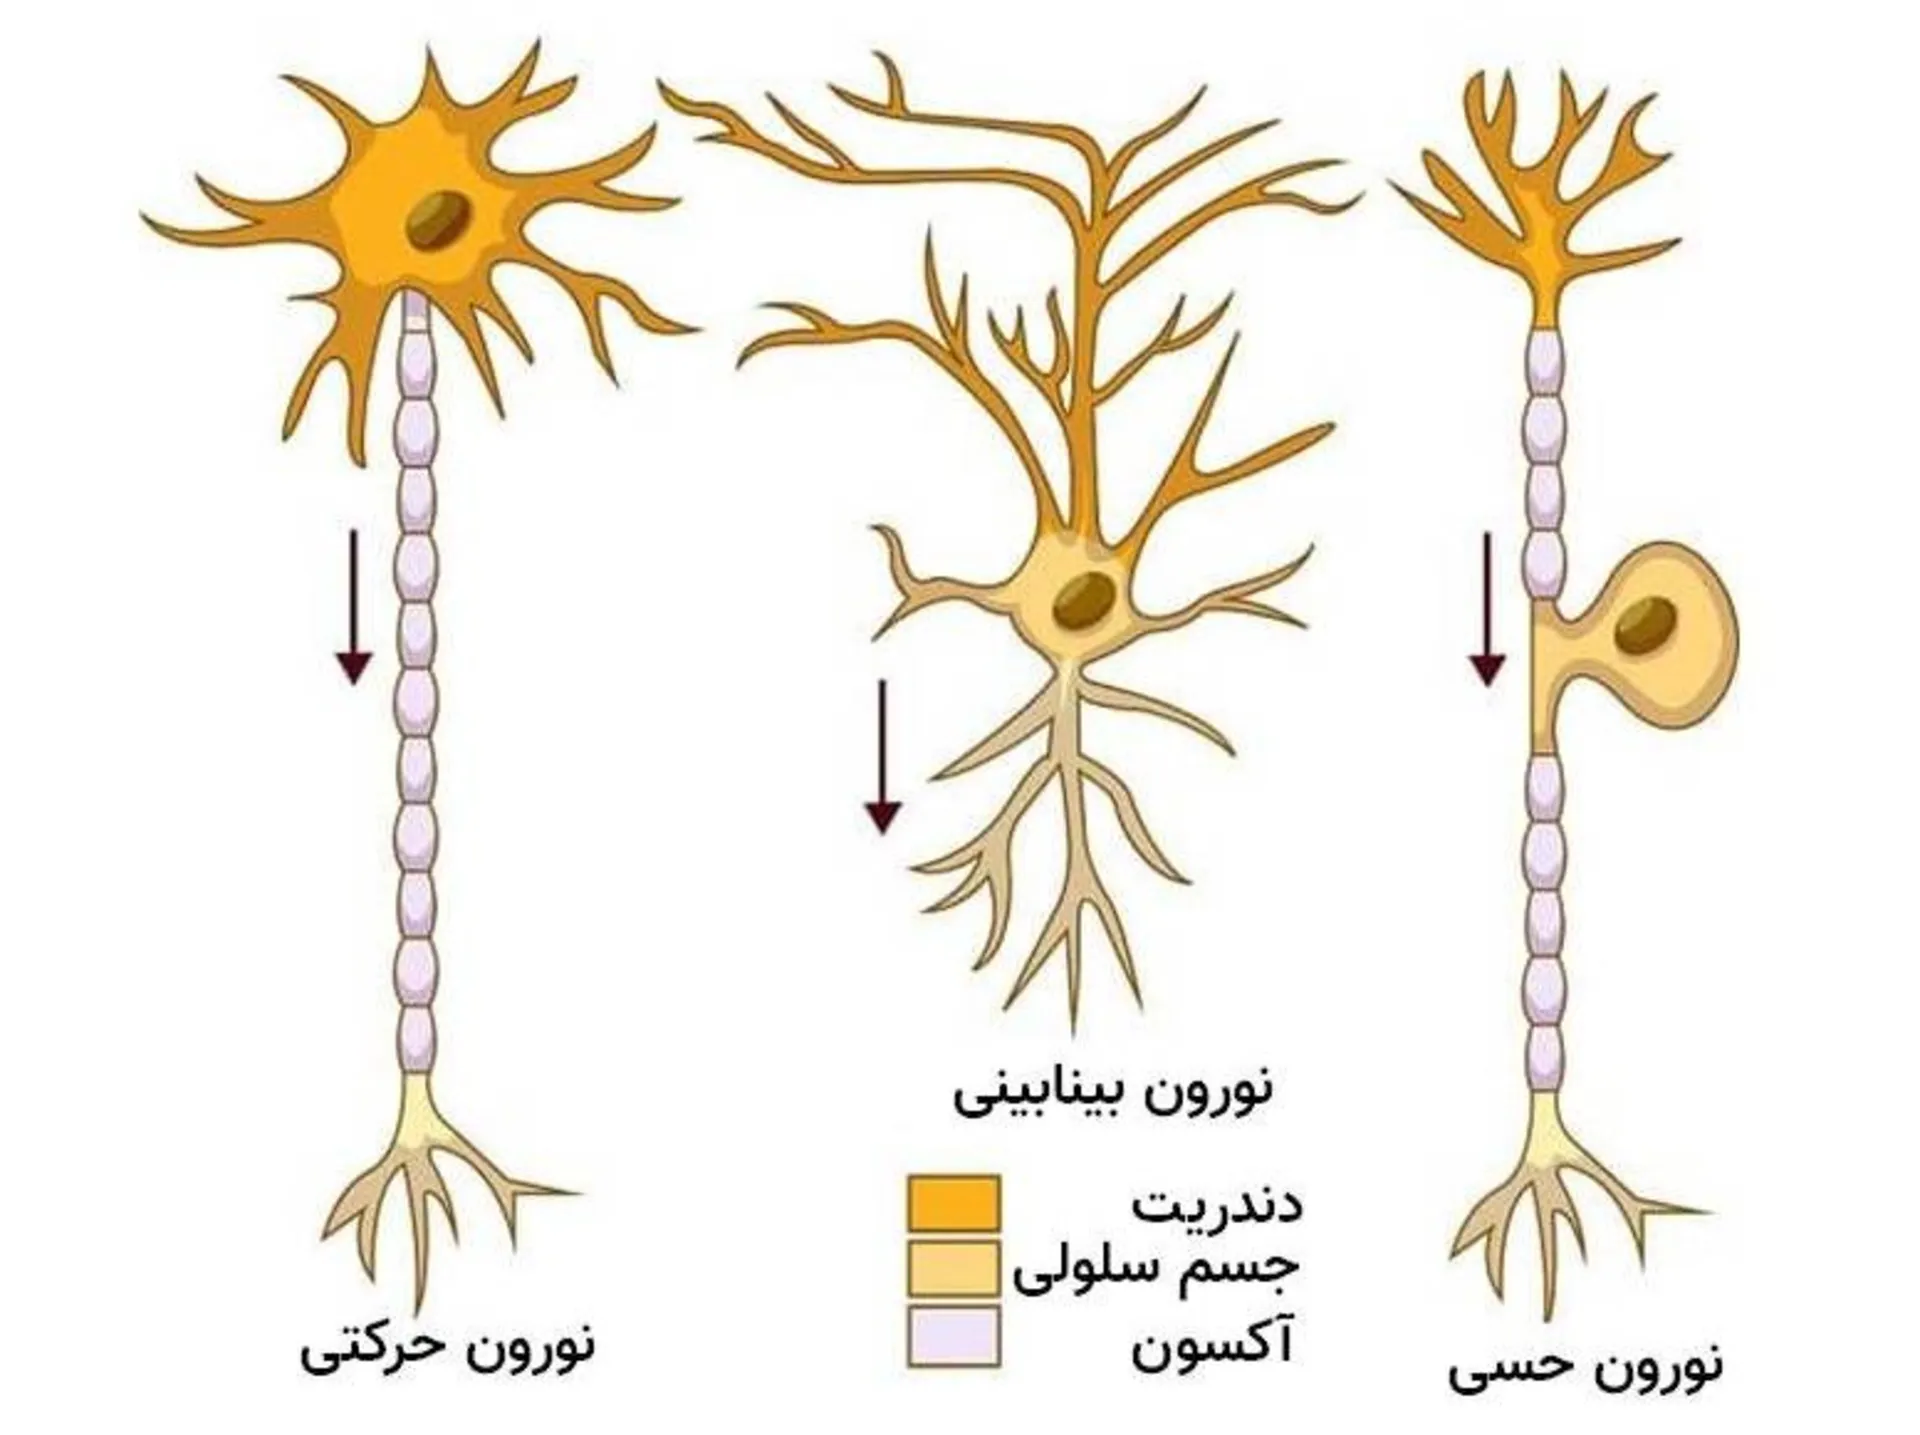 نورون حسی و نورون حرکتی و نورون بینابینی / neuron or nerve cell